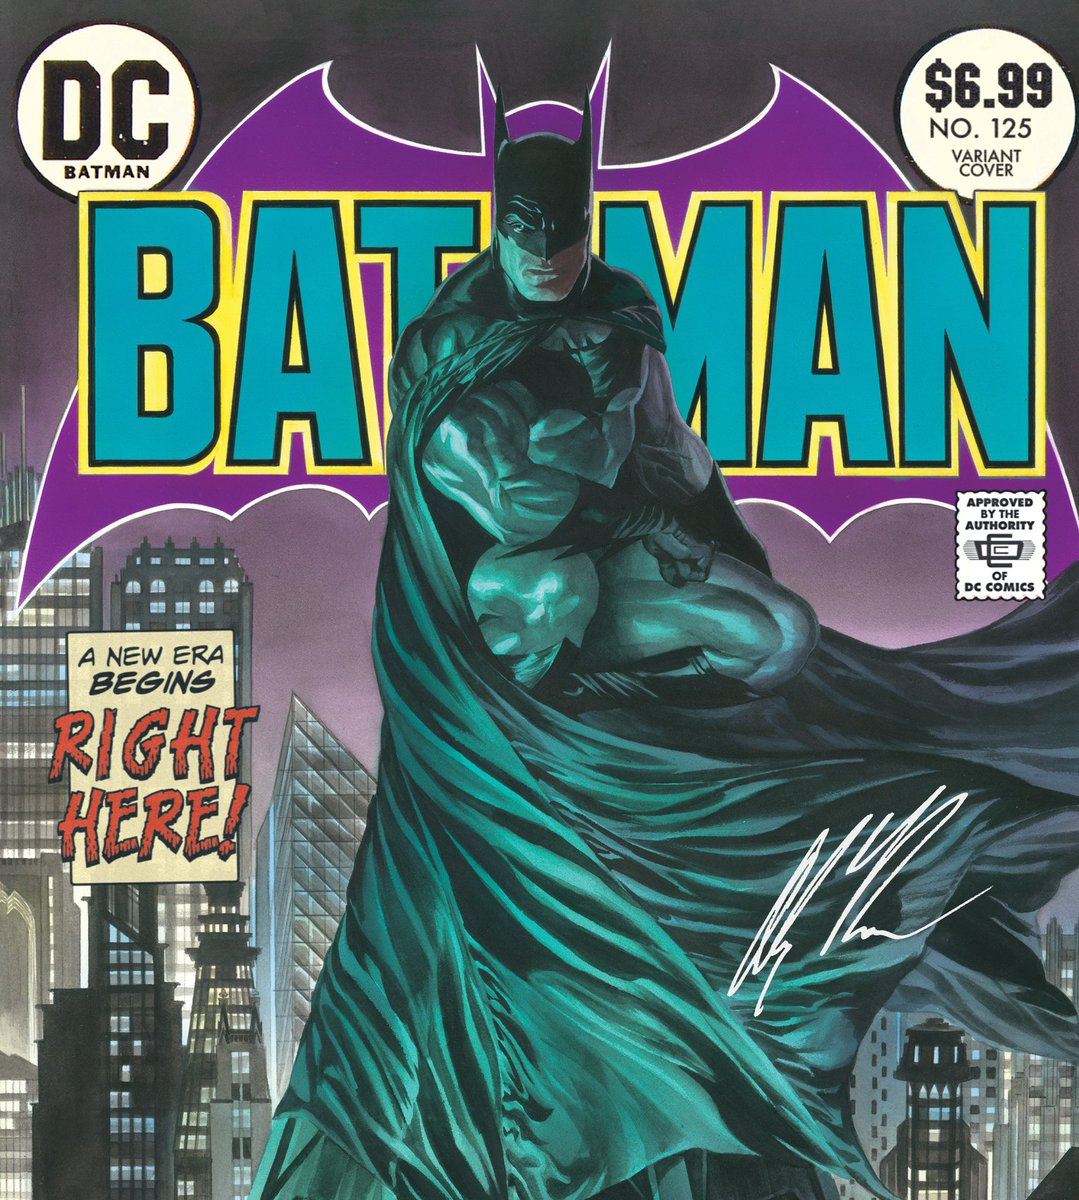 Reminder that Batman #125 #SDCC Exclusive pre-sale starts Friday, June 24 @ 3PM ET. Limited pre-order quantities! If you're planning to buy, be sure to join the waitlist: https://t.co/EAT6xXYqzZ

#comiccon #batman #sdcc2022 #comiccon2022 #comicart 